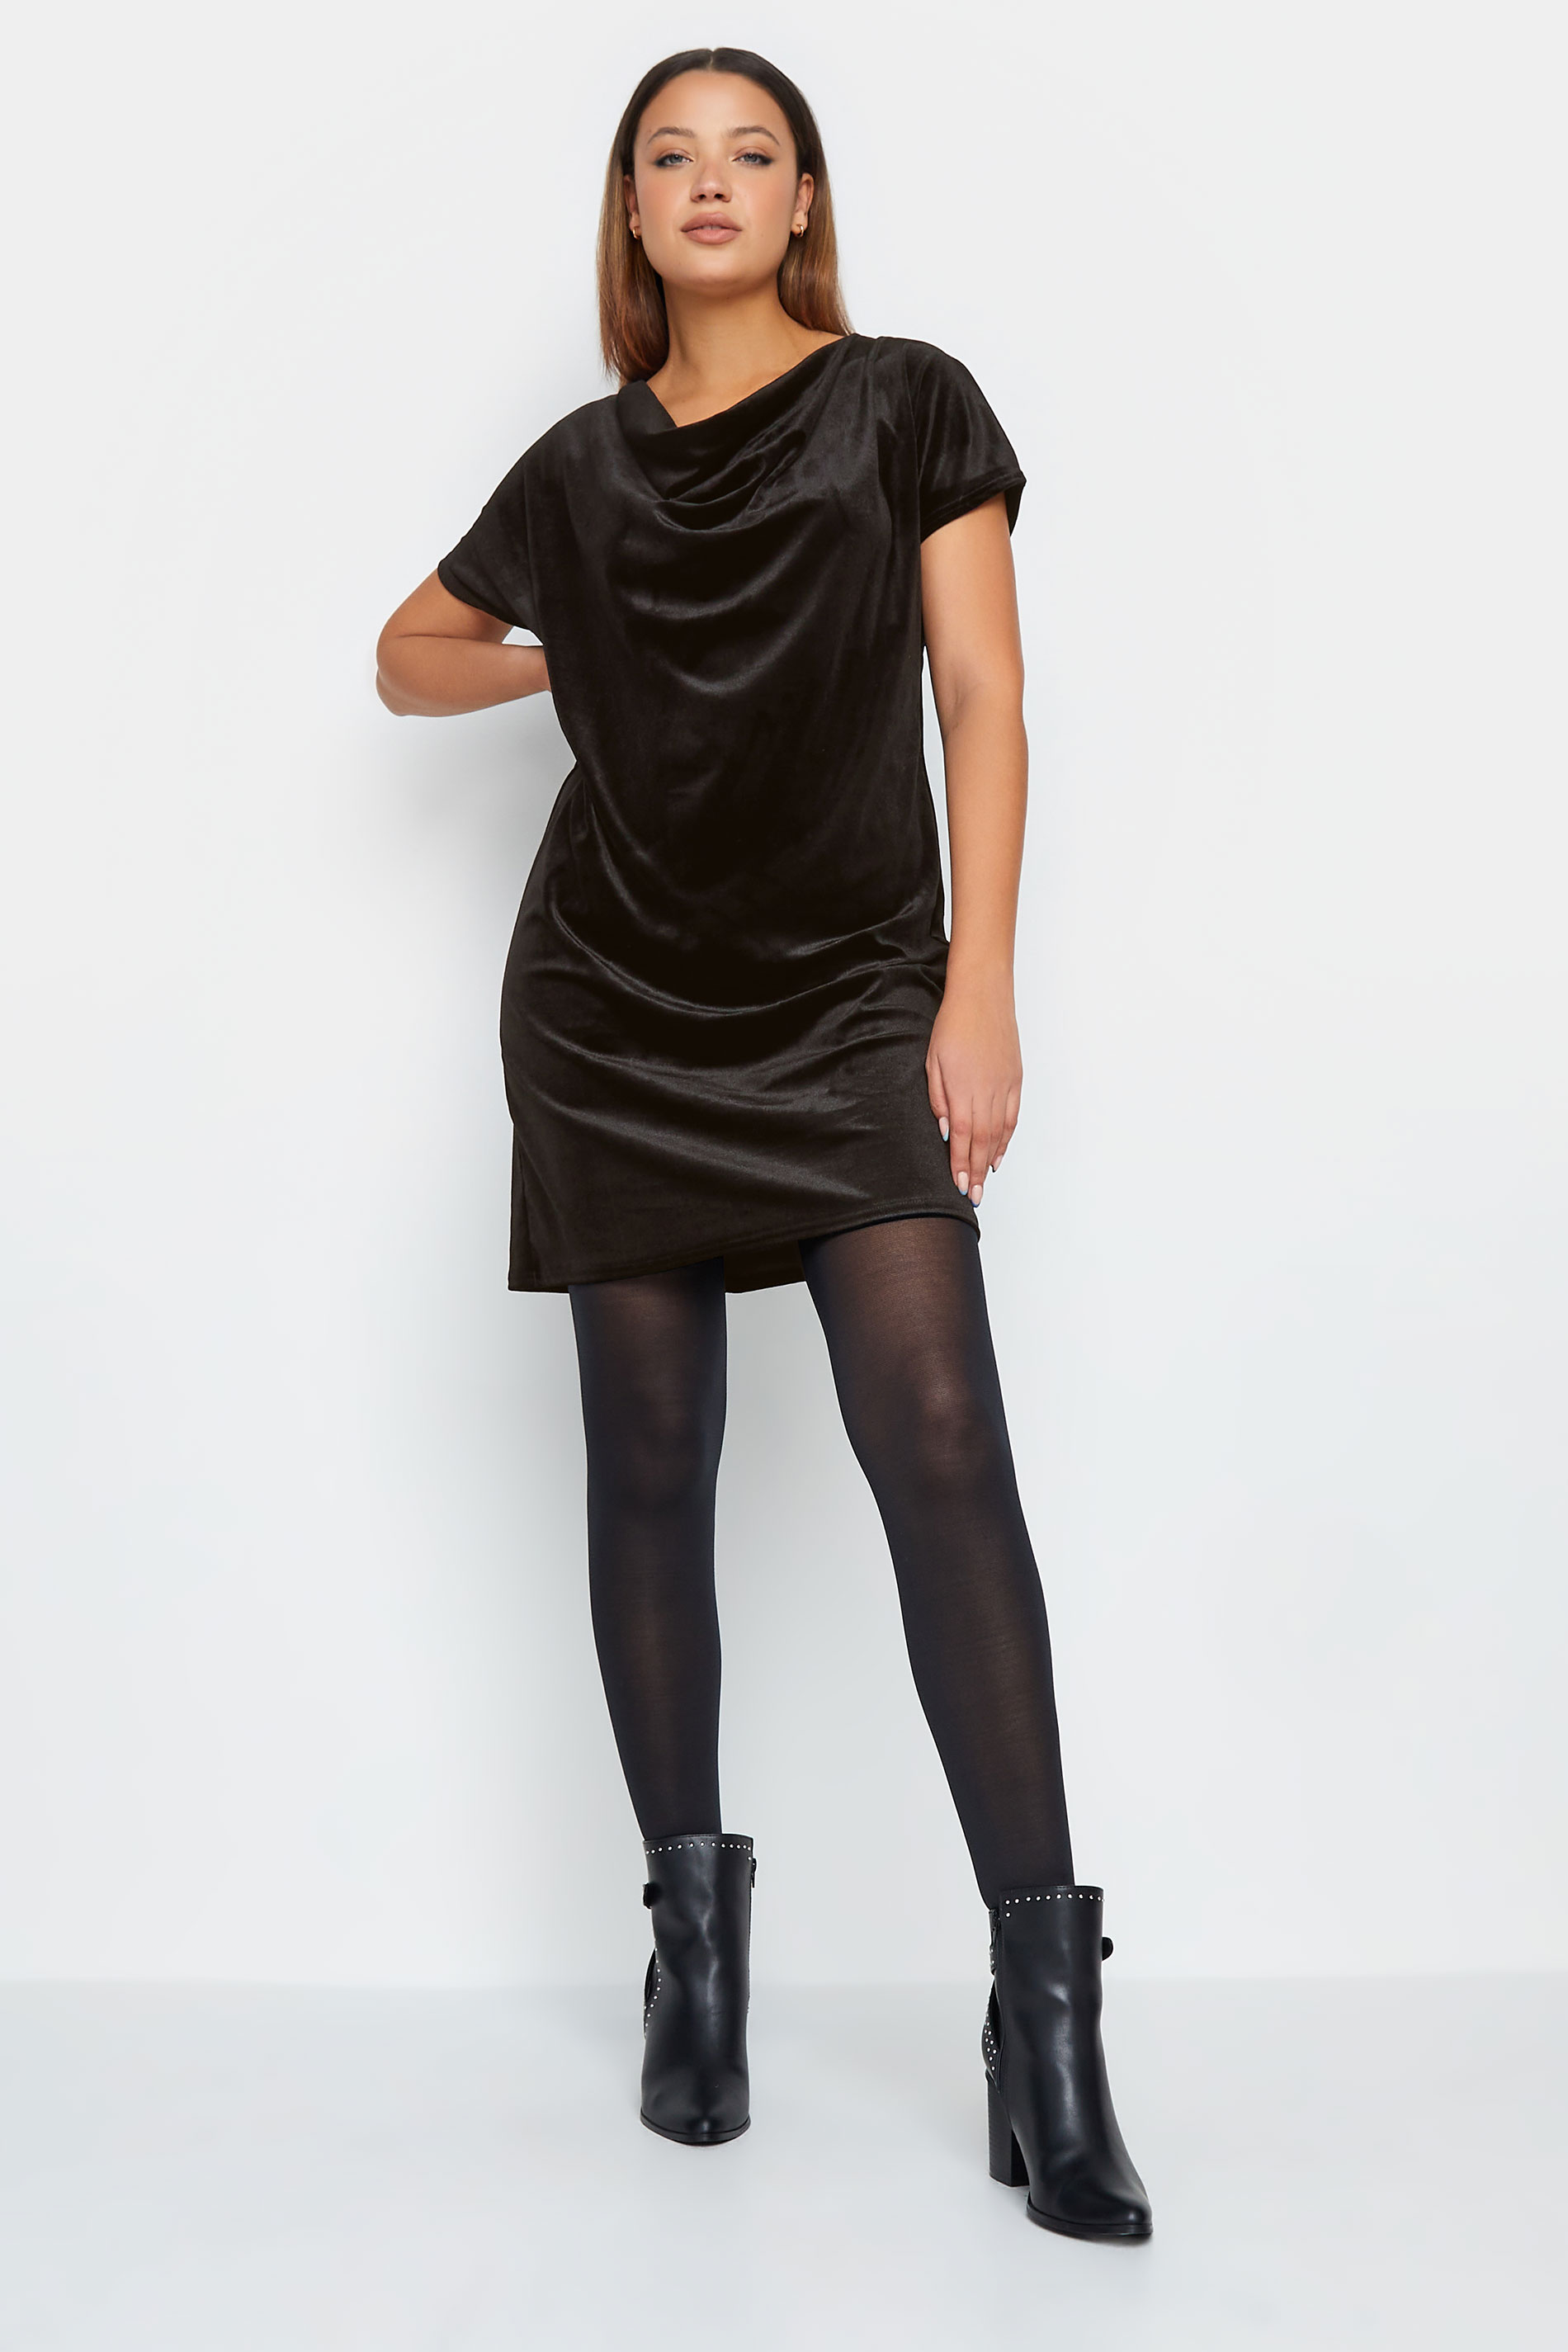 LTS Tall Womens Black Velour T-Shirt Dress | Long Tall Sally  2